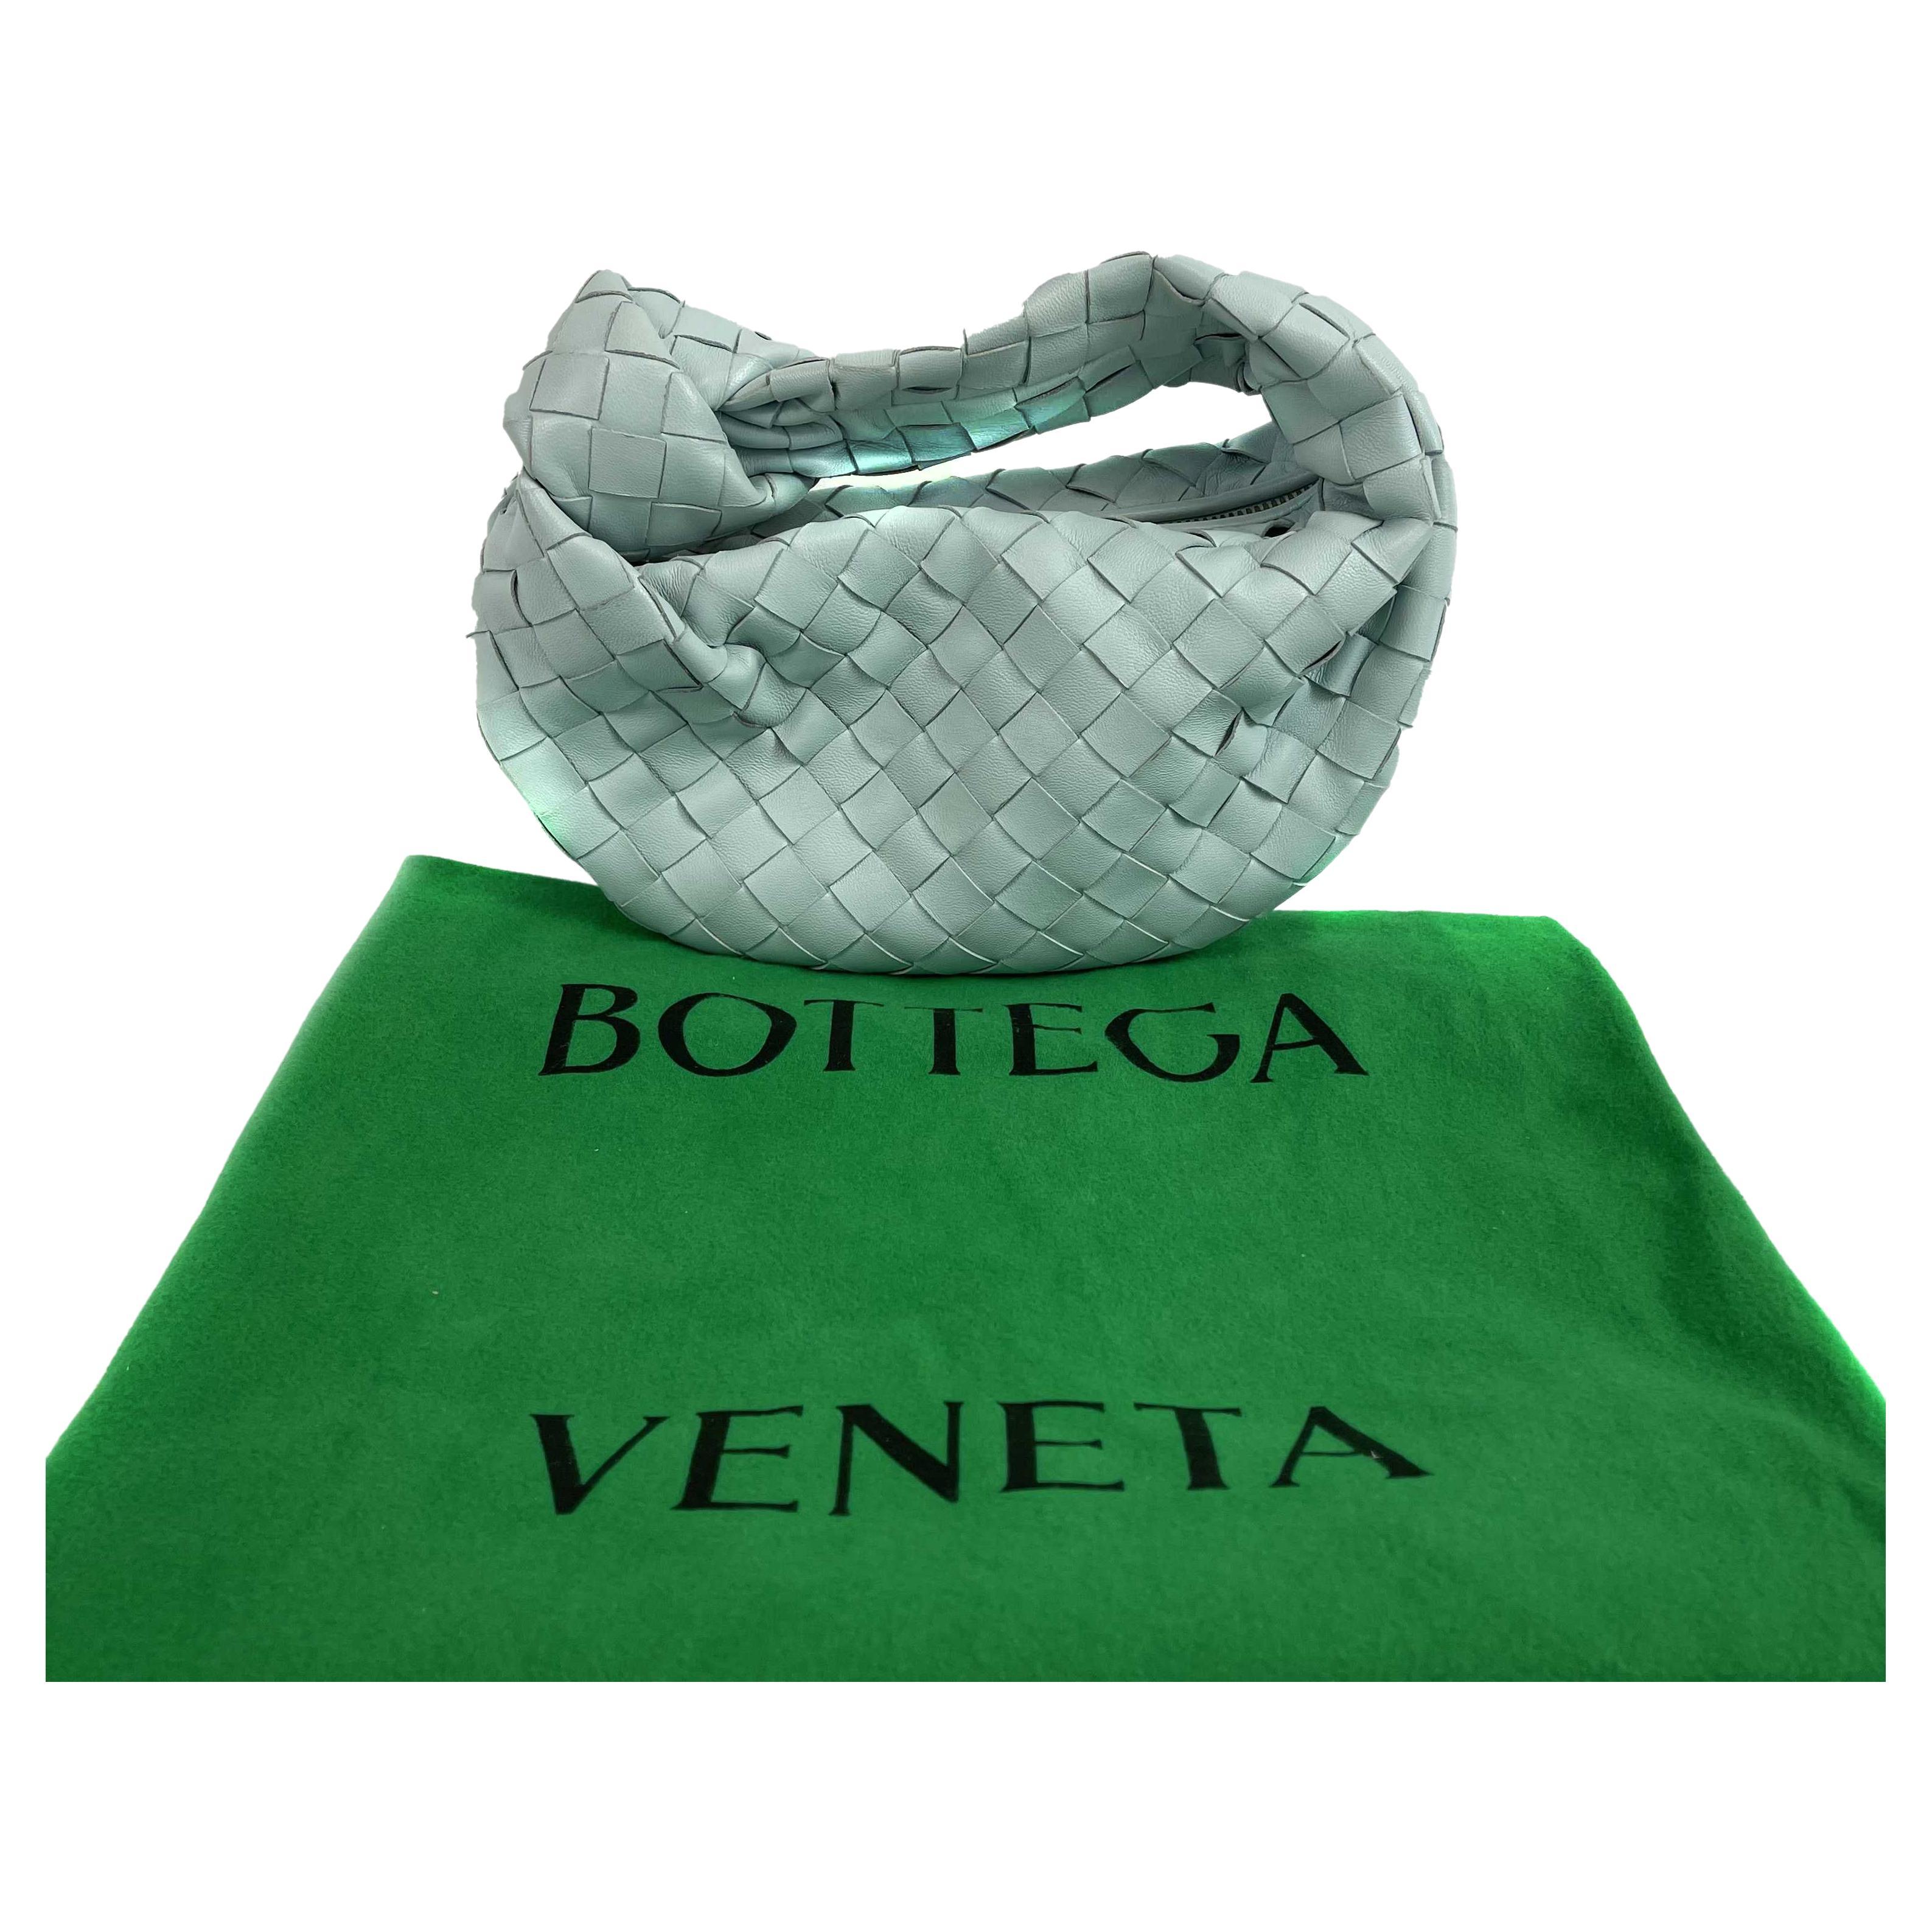 Bottega Veneta - Mini Jodie Knotted Leather Washed Teal Blue - Brand New